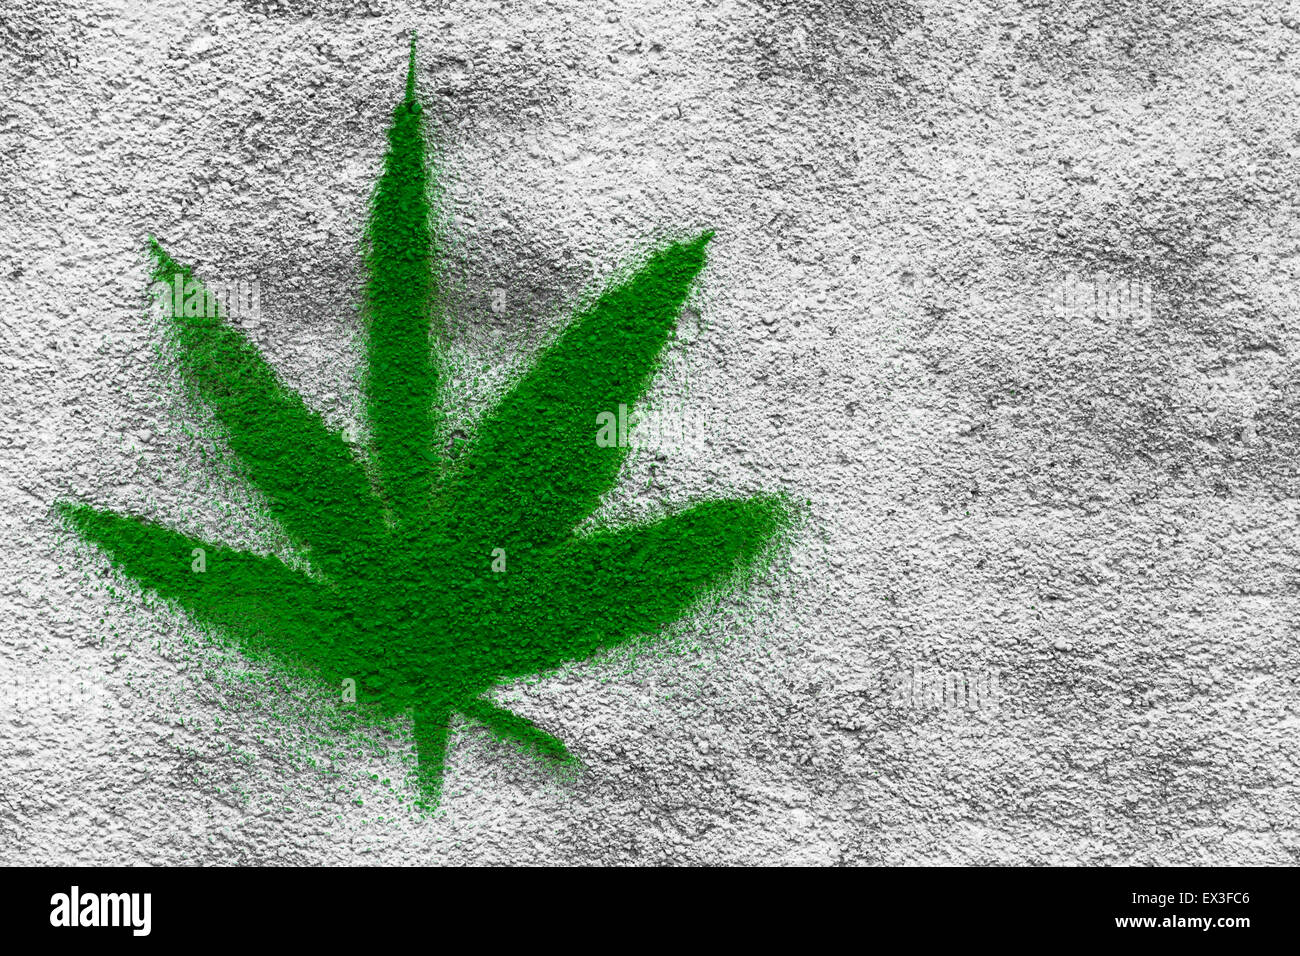 Marijuana leaf drawn on a wall with spray paint. Stock Photo